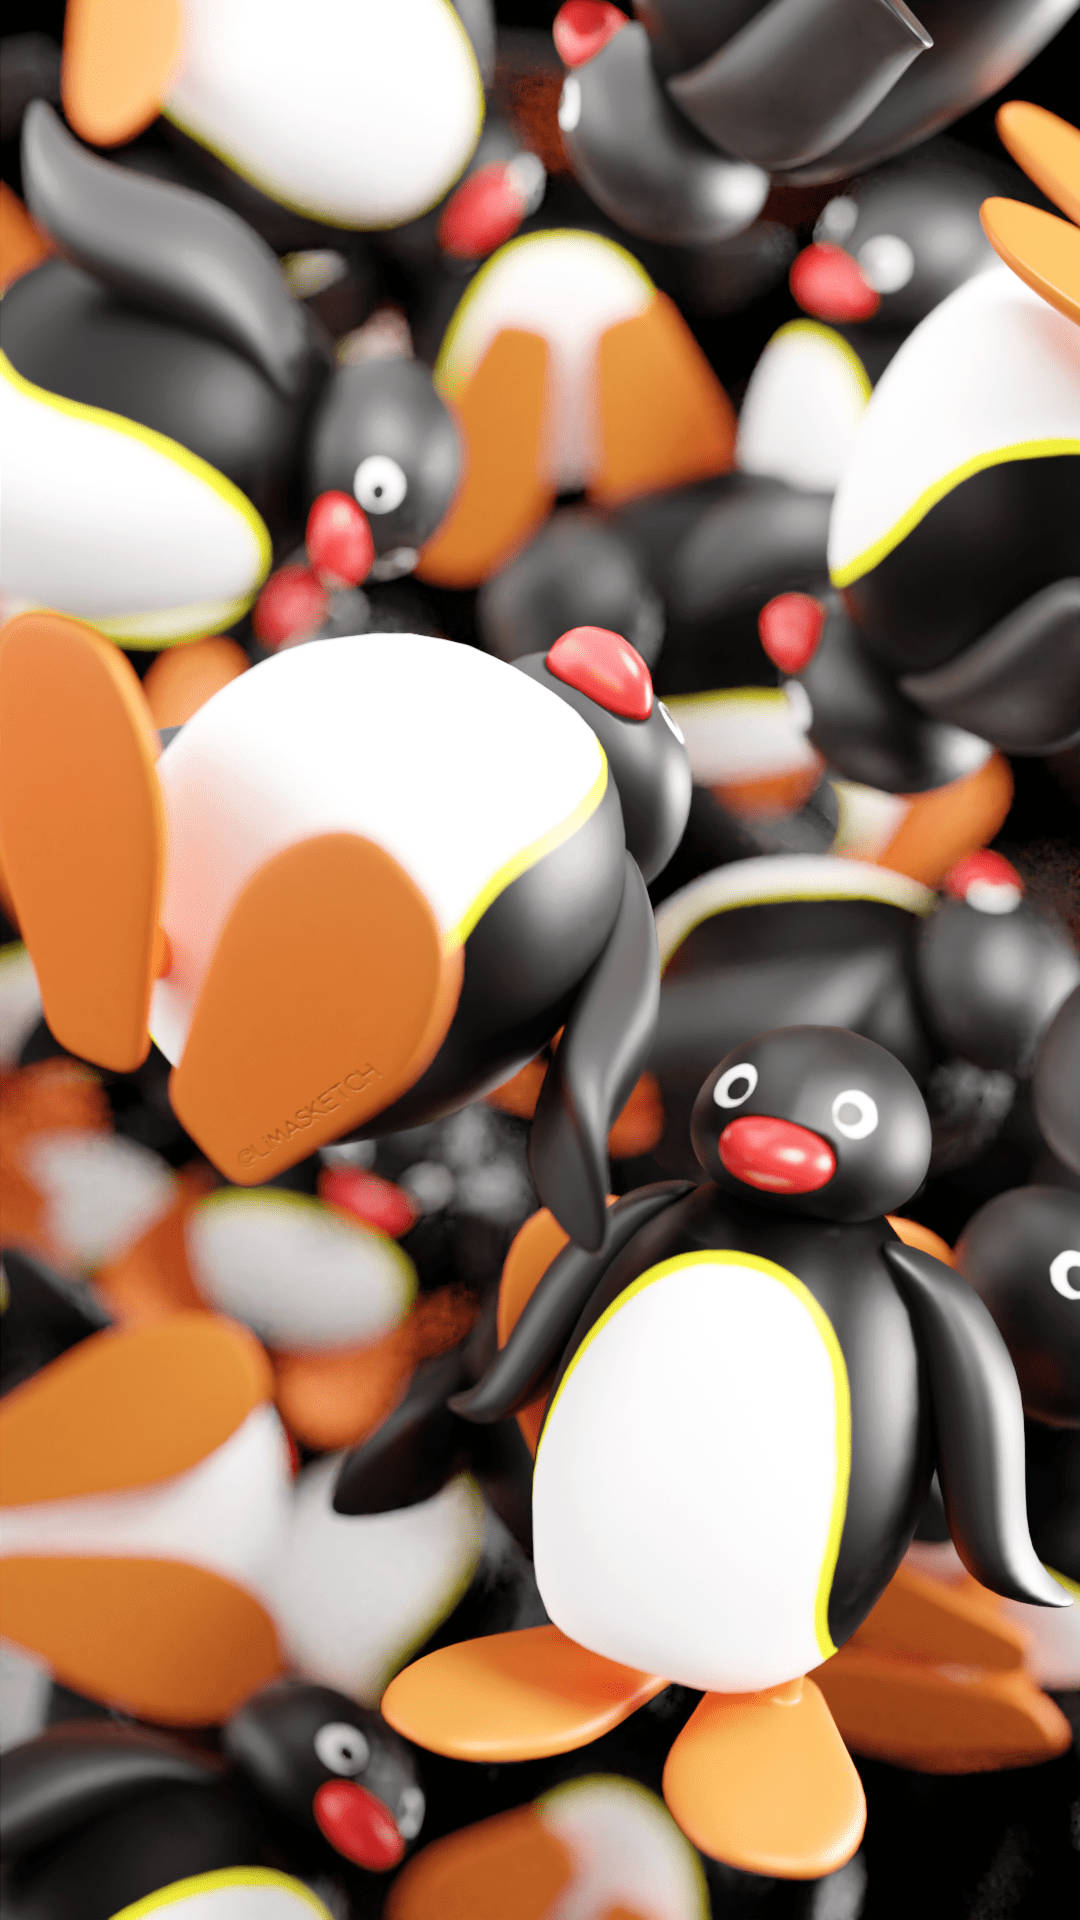 Pingu Toy Figures Wallpaper